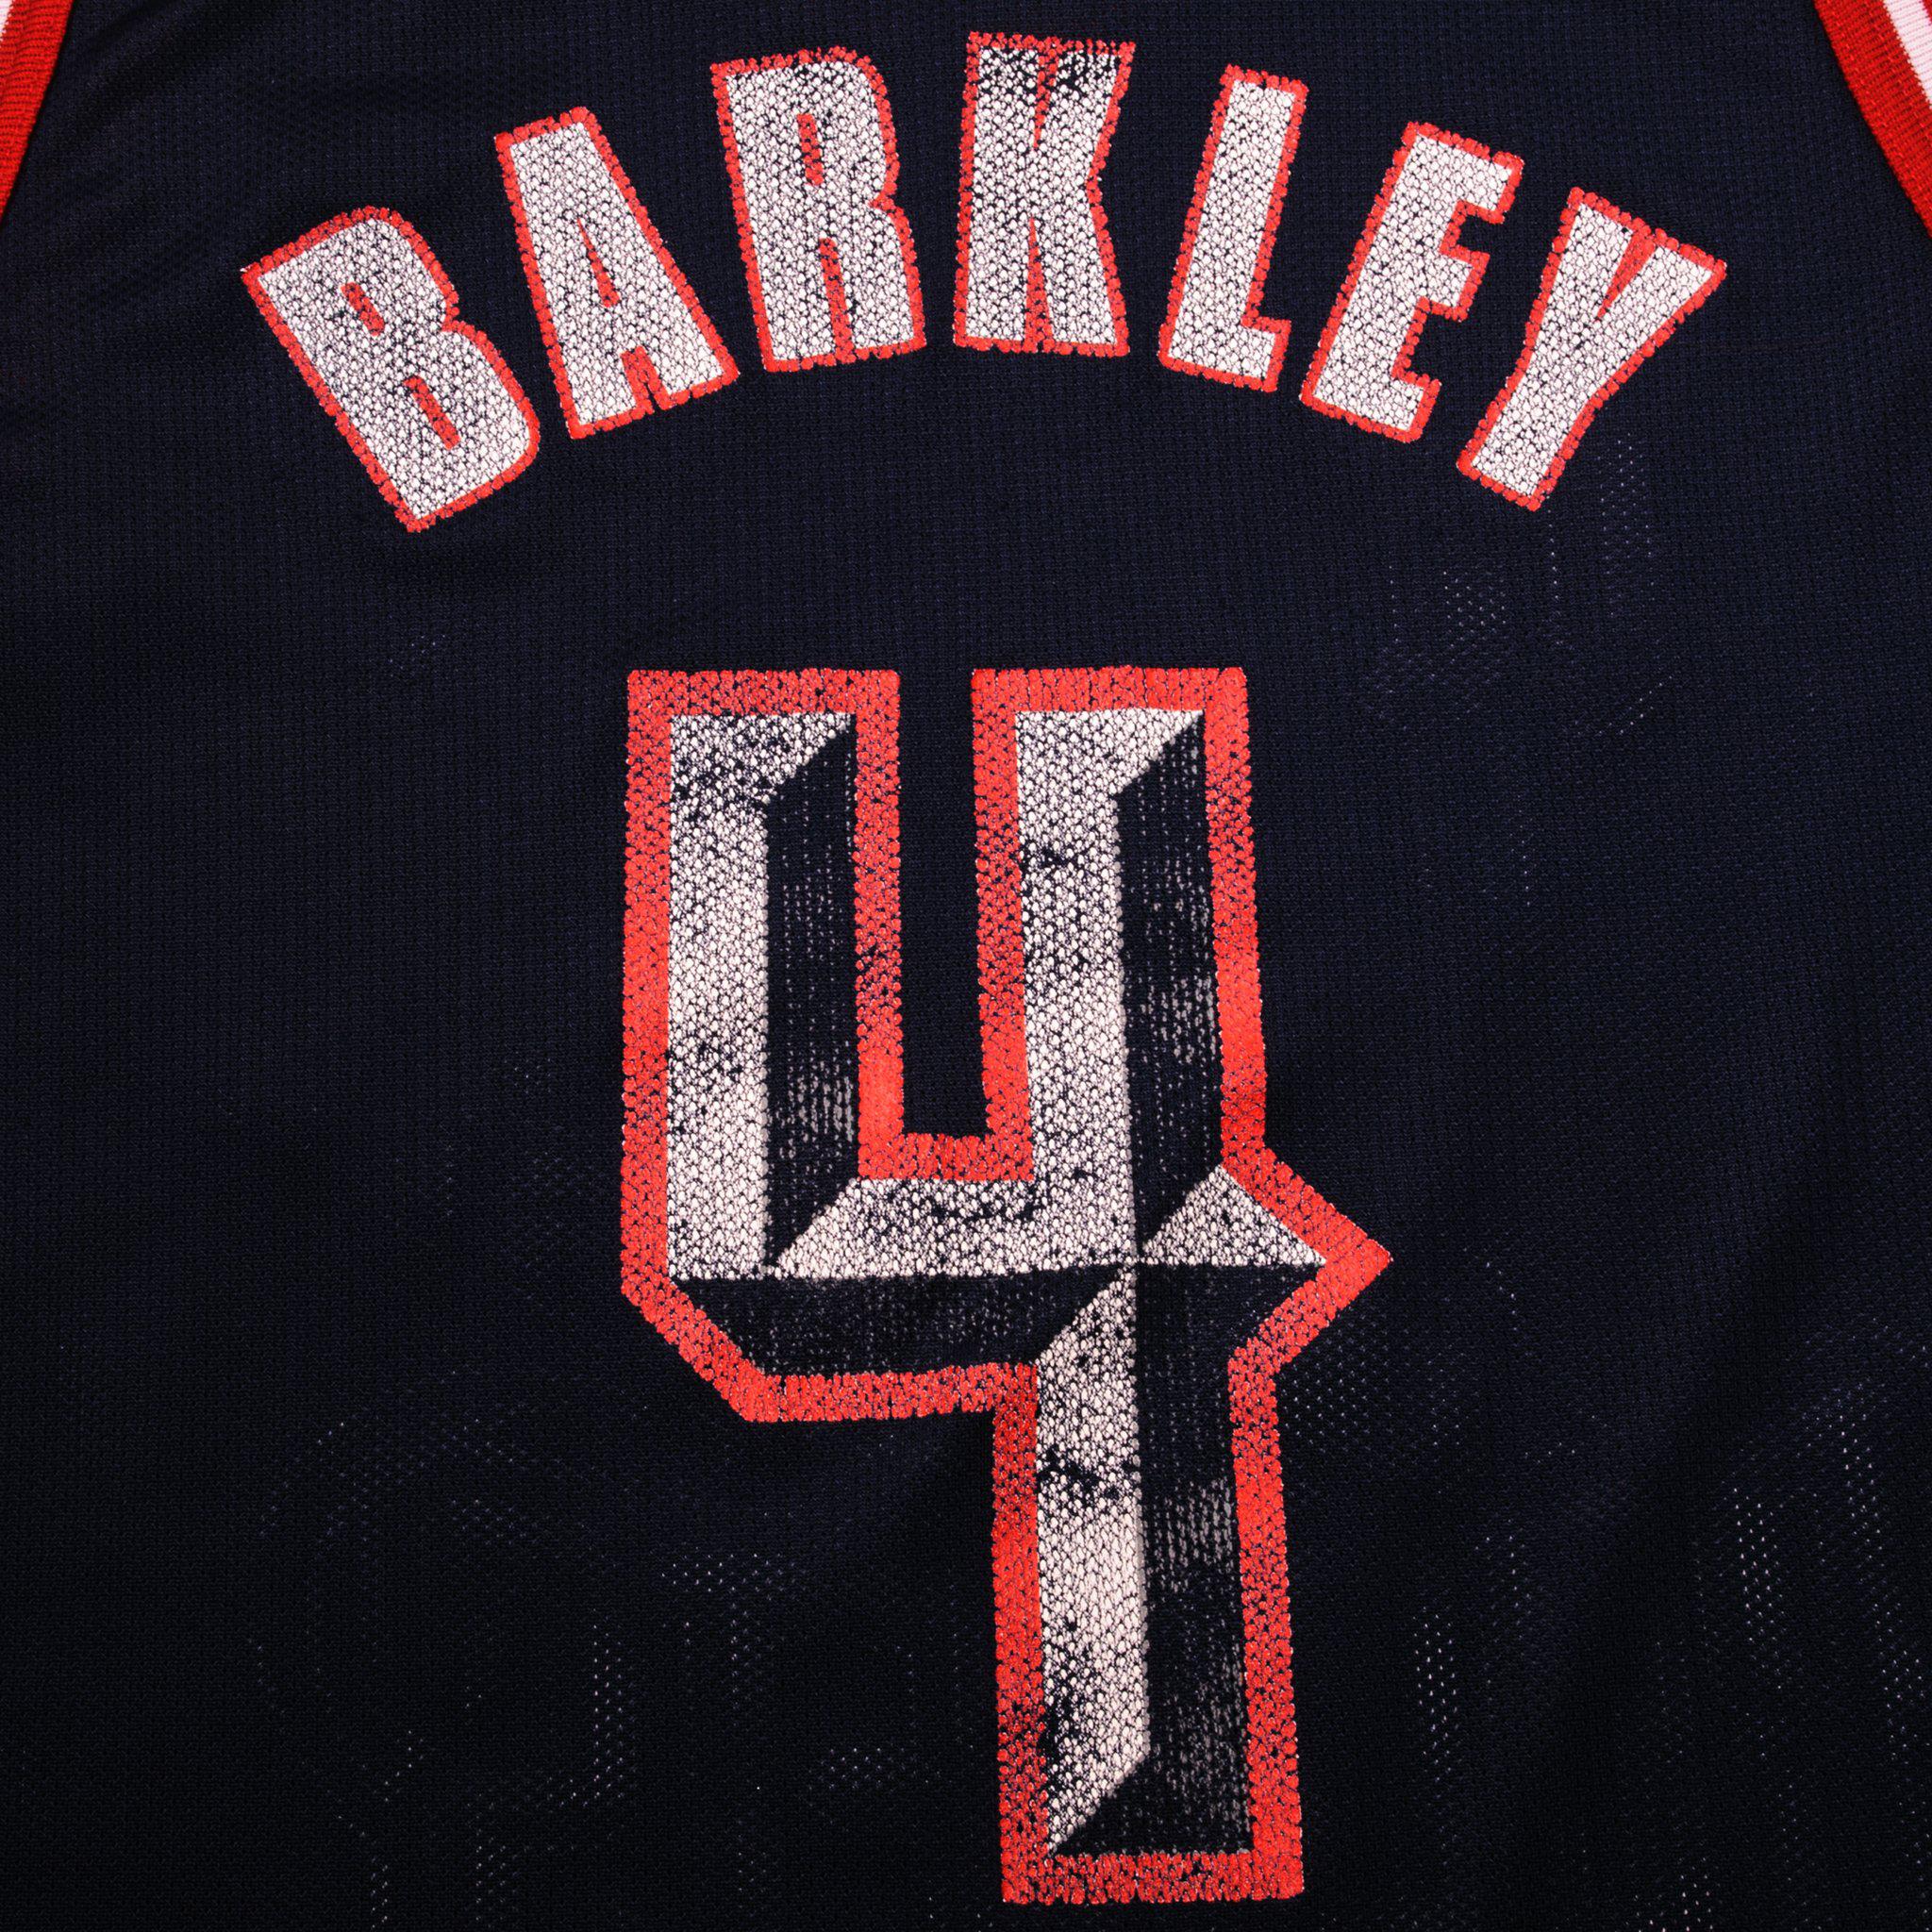 Charles Barkley Houston Rockets Reversible Champion Jersey Size 4